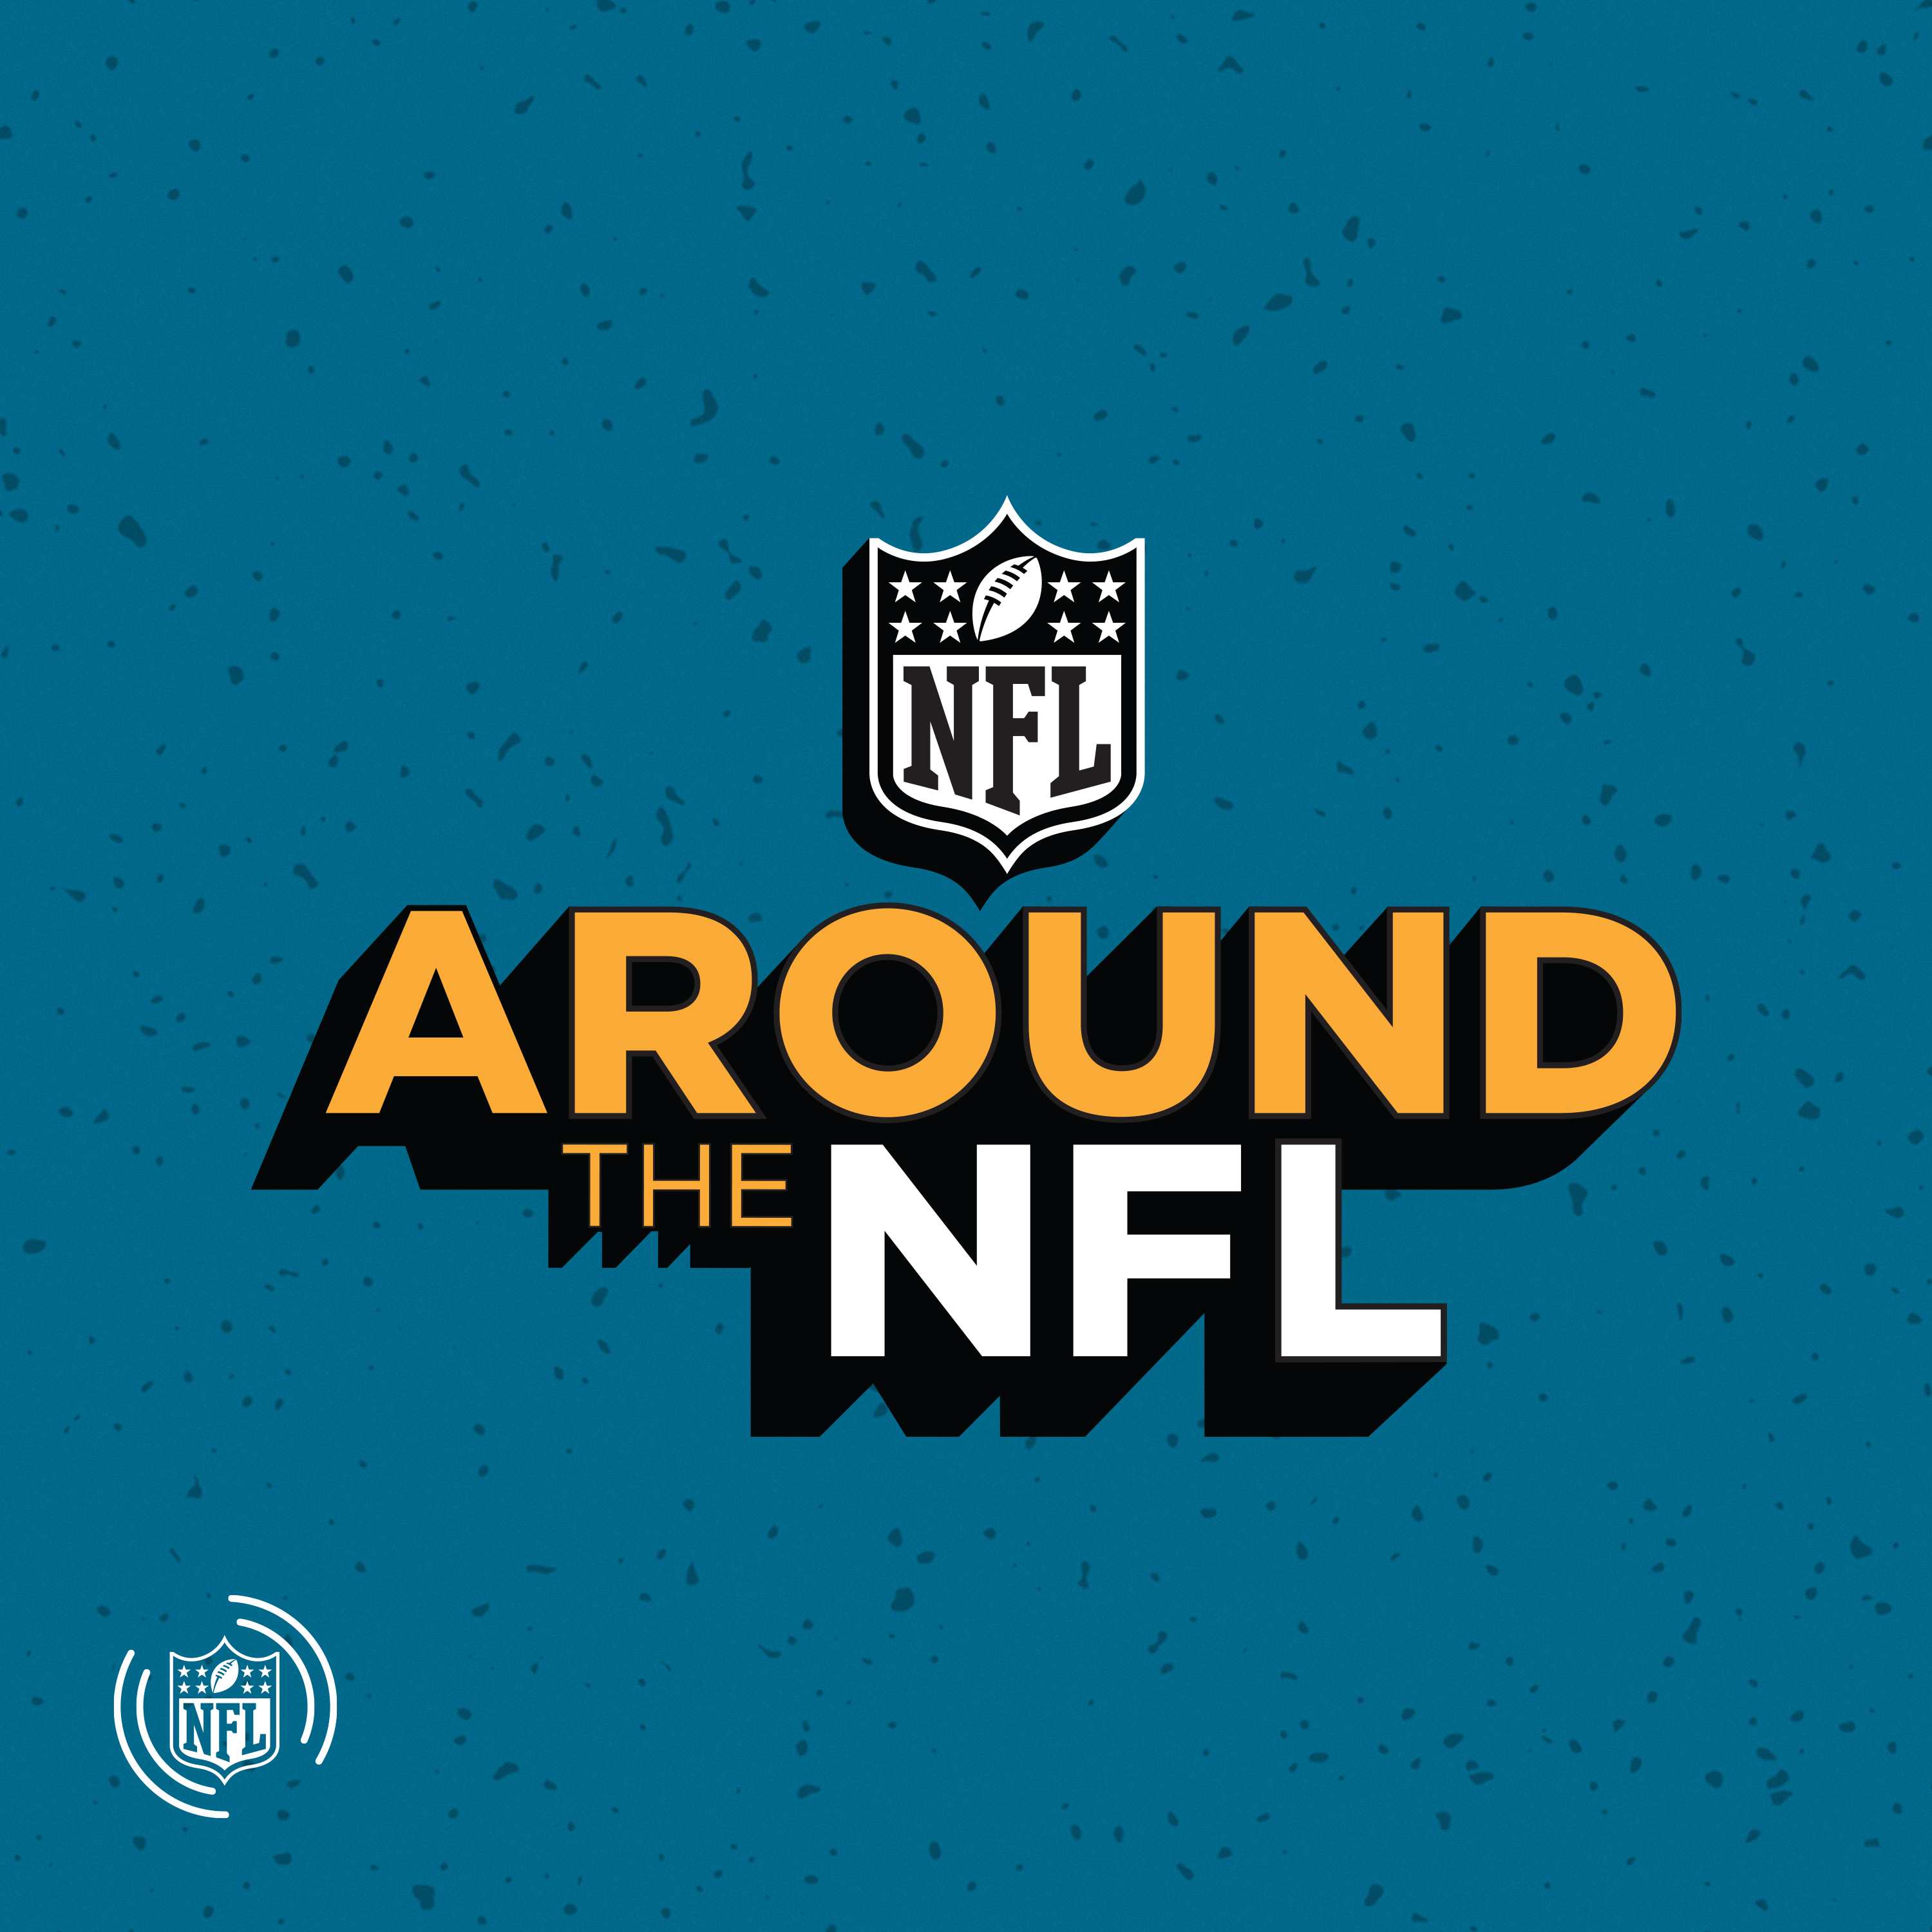 NFL ATL: Preseason takeaways